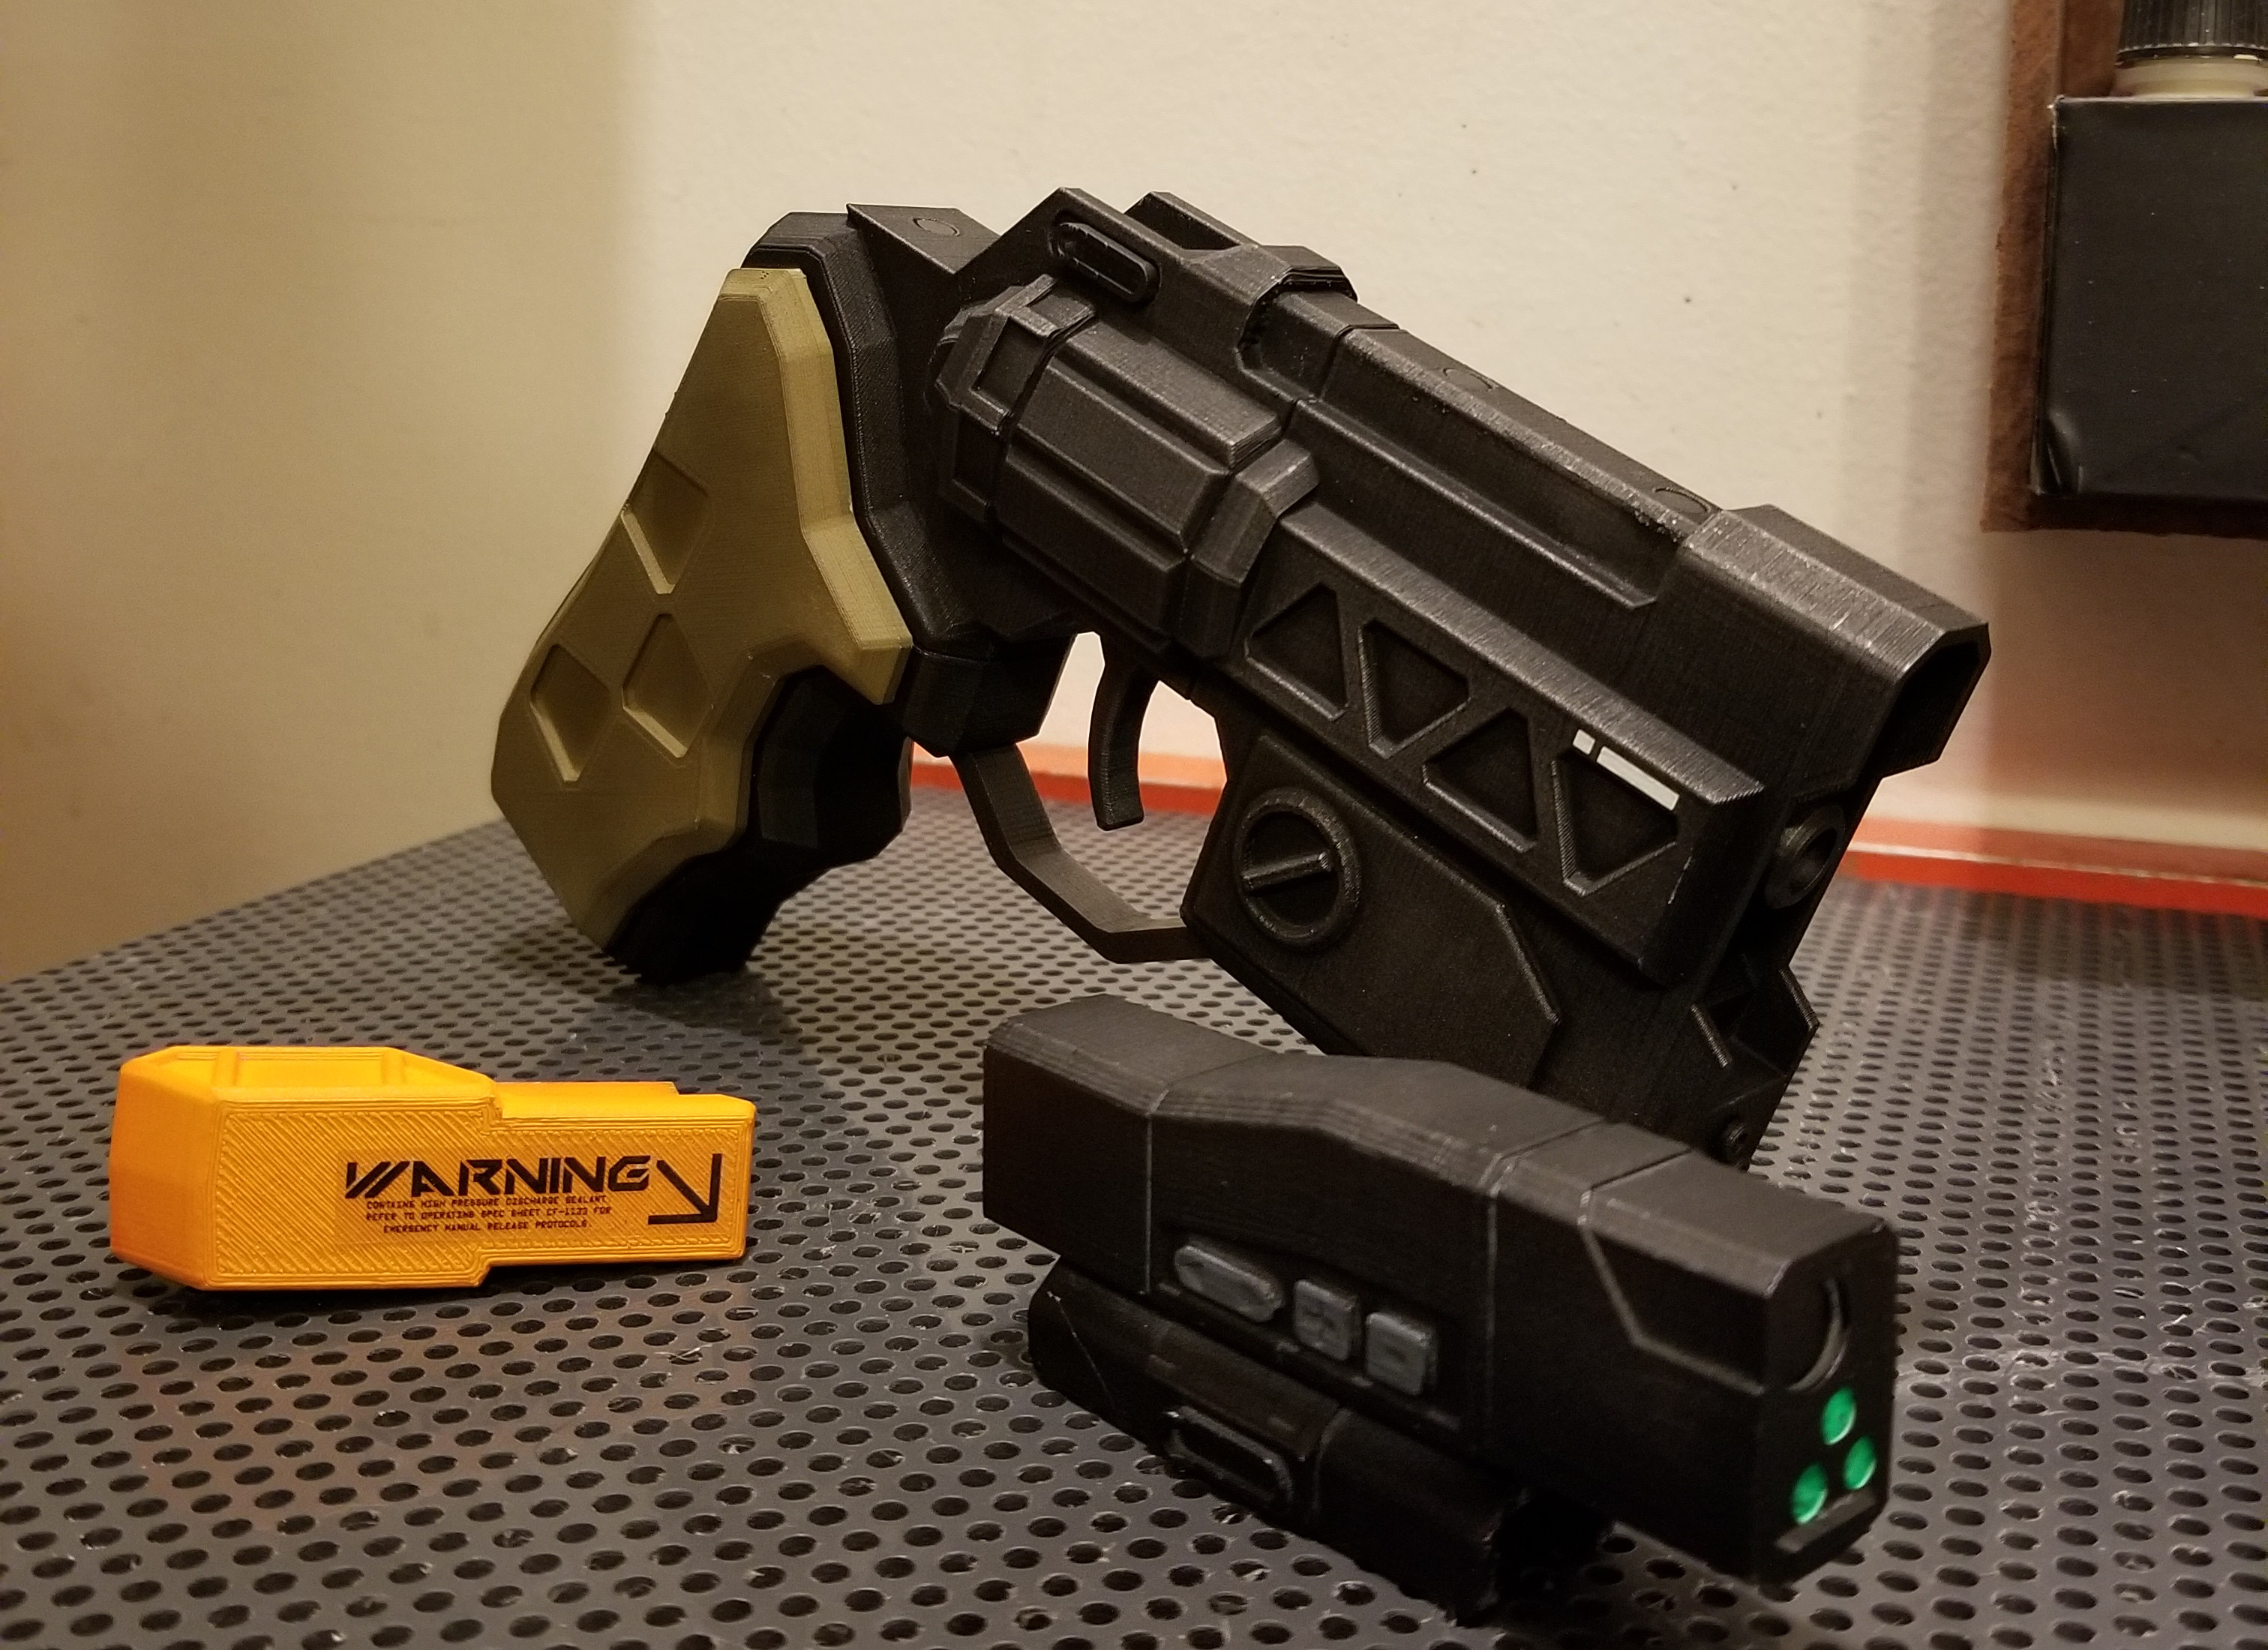 3D Printed. Rail pistol with attached bullet encoder. Original design